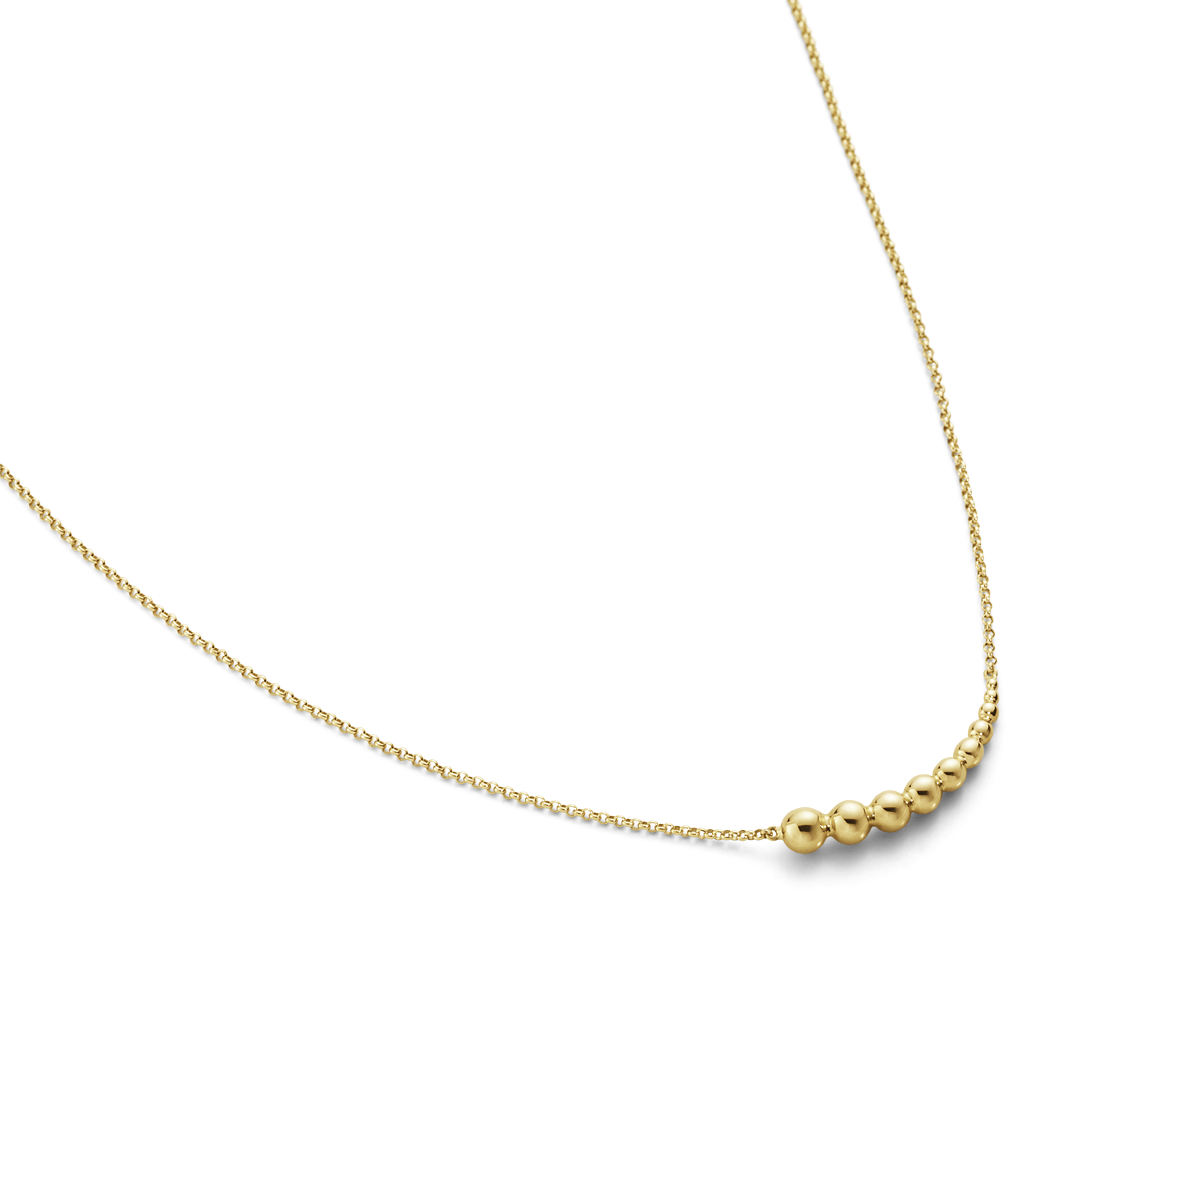 Georg Jensen Grapes 18KY Necklace